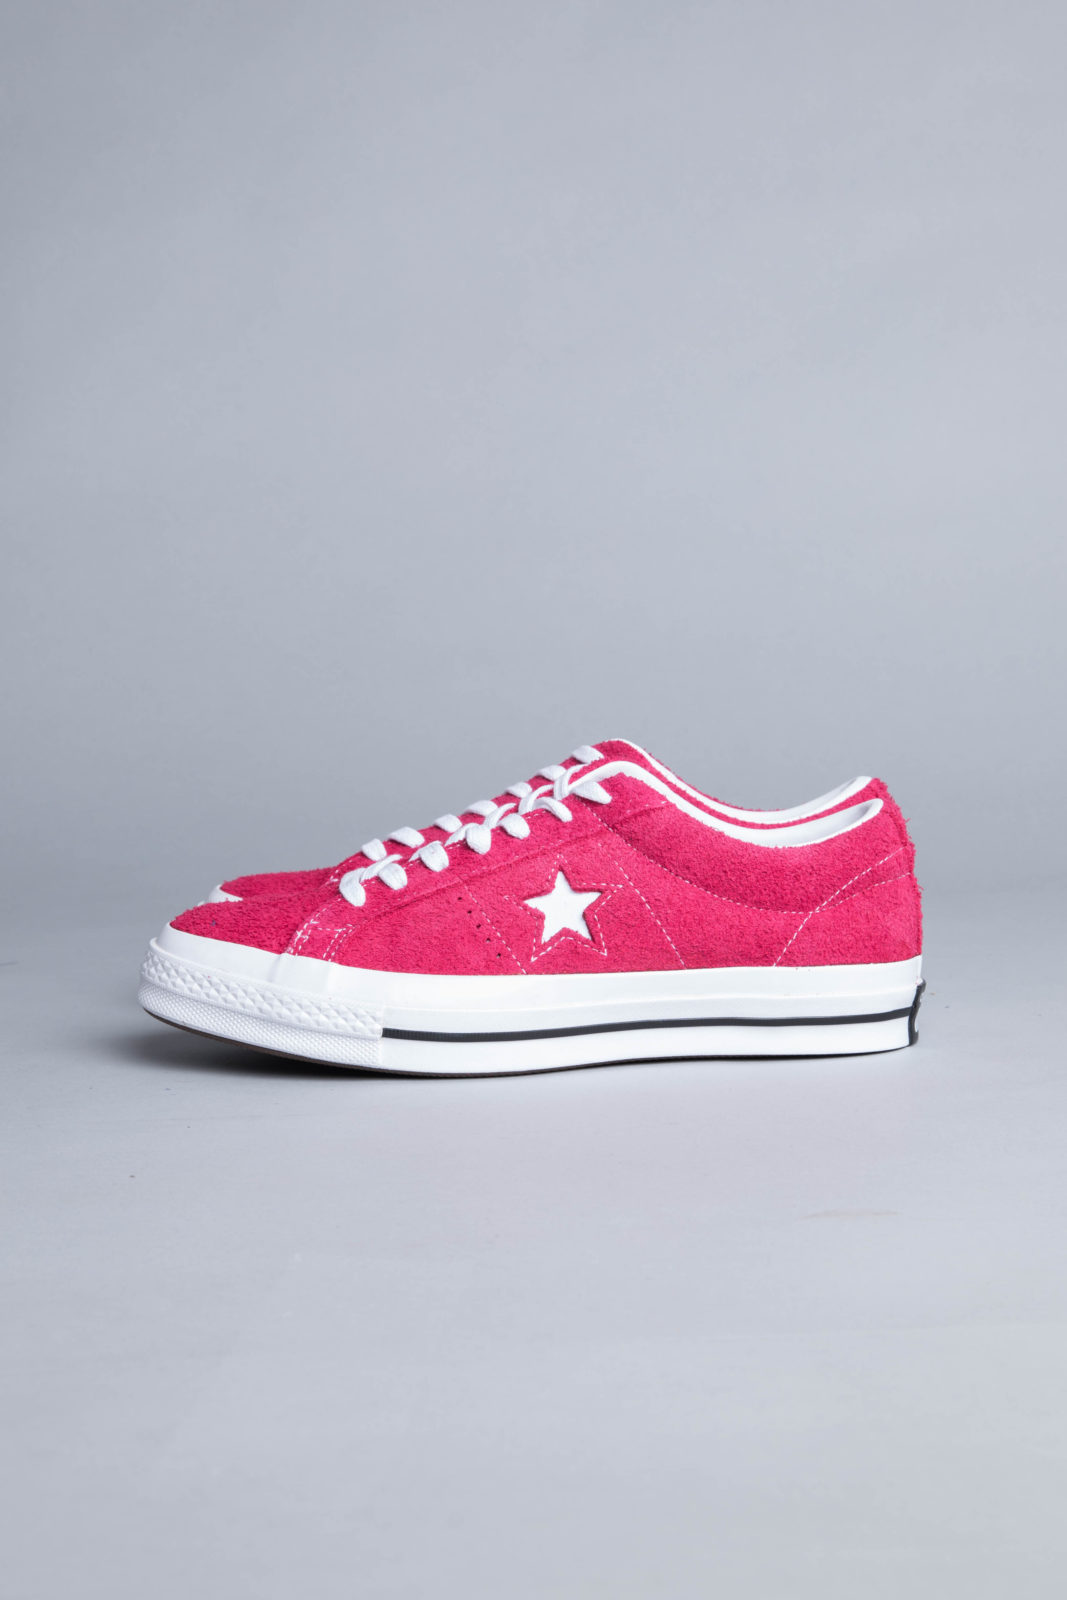 Converse One Star OX Pink Pop White 